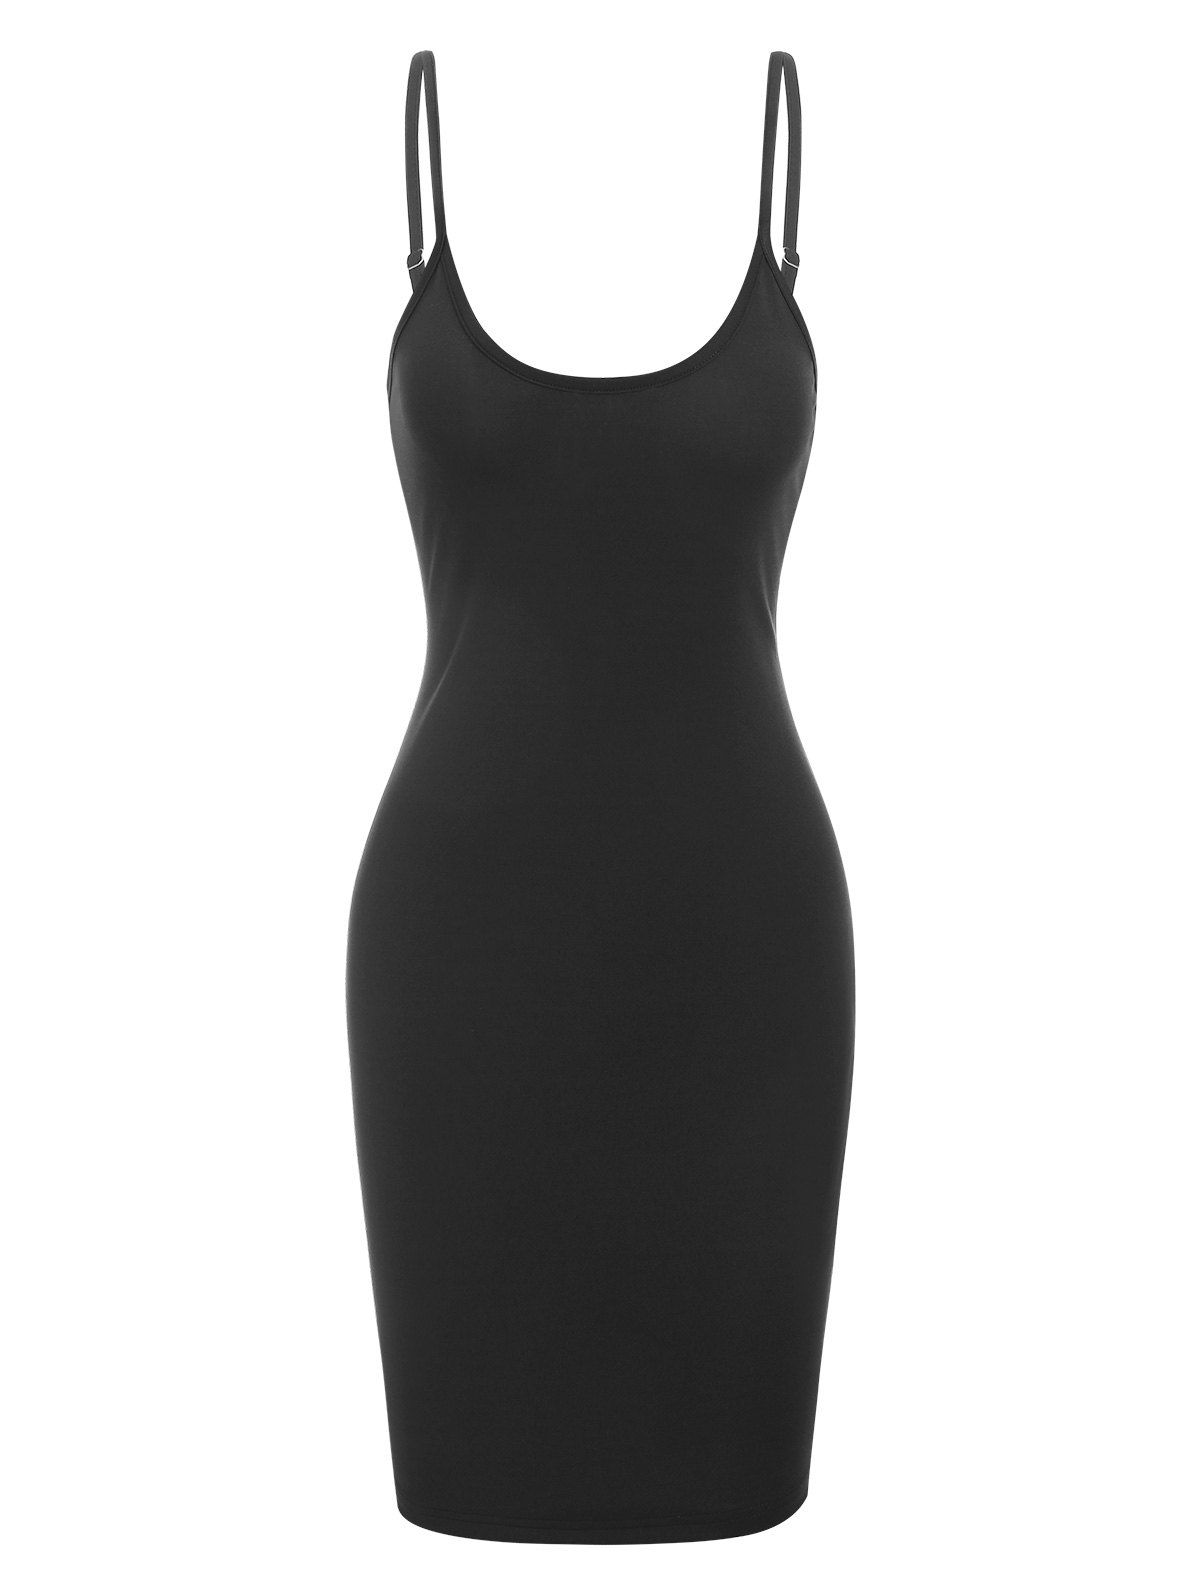 Spaghetti Strap Plain Mini Bodycon Dress - BLACK XXL